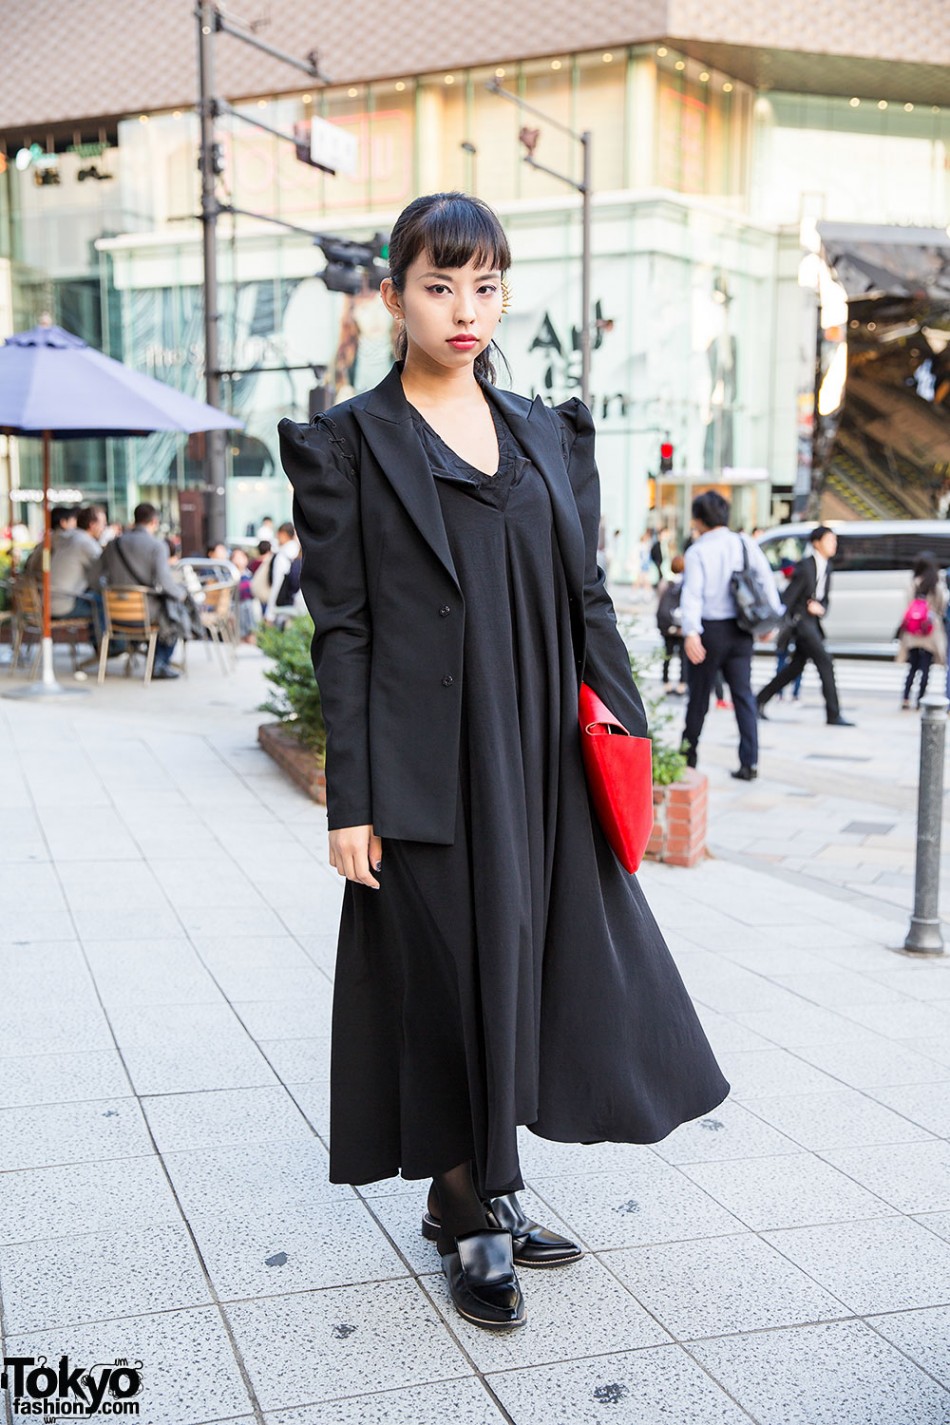 All Black Yohji Yamamoto Street Style – Tokyo Fashion News